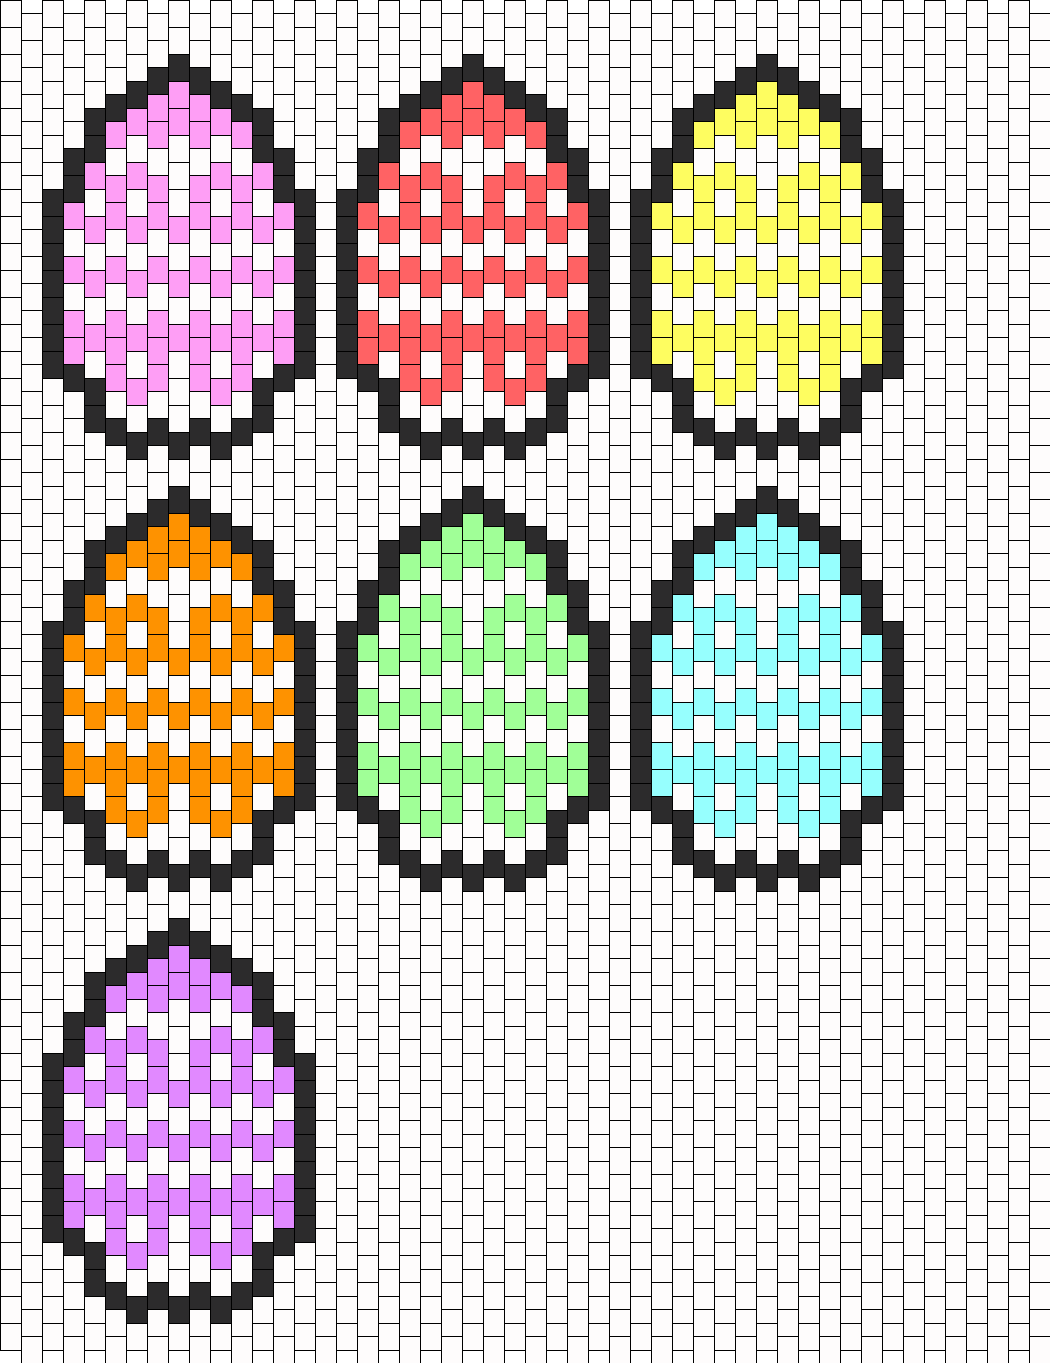 Rainbow Easter Eggs